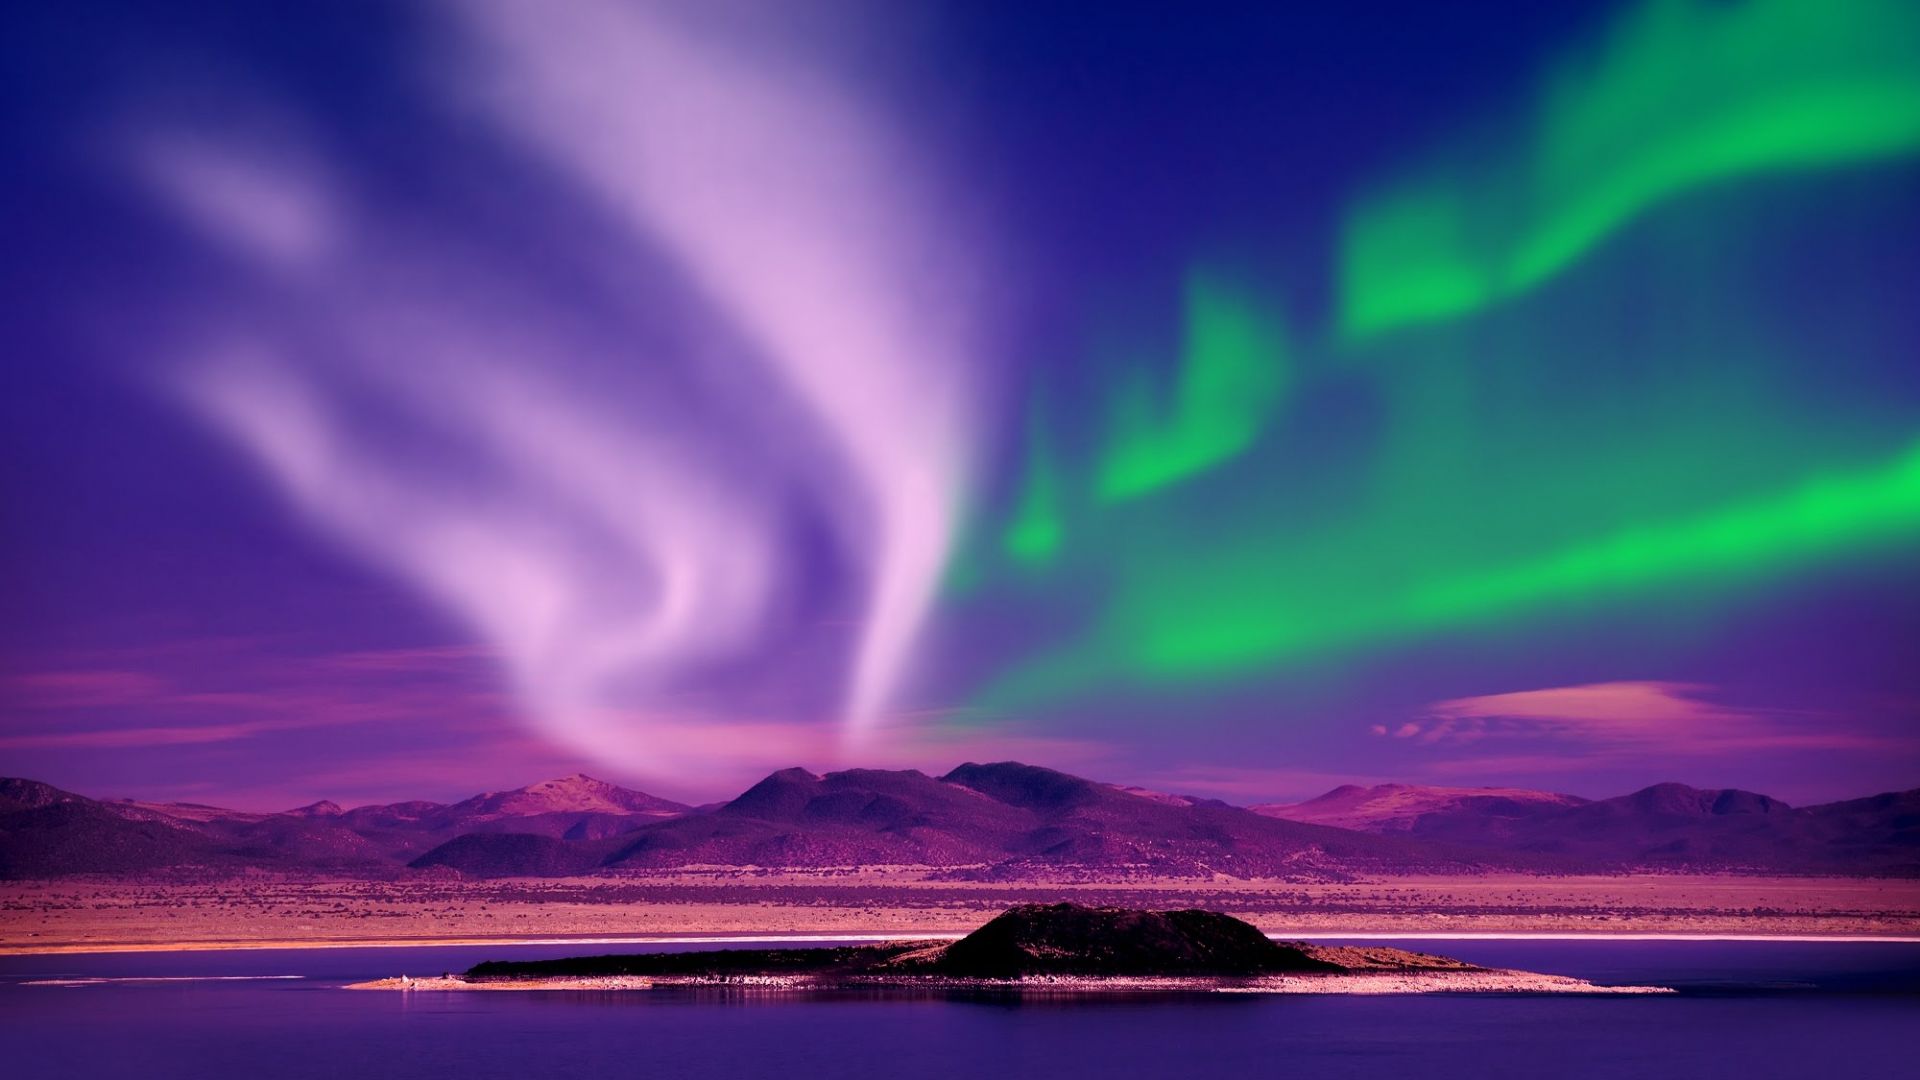 Desktop Wallpaper Amazing The Northern Lights Of Alaska, HD Image, Picture, Background, L3bvi